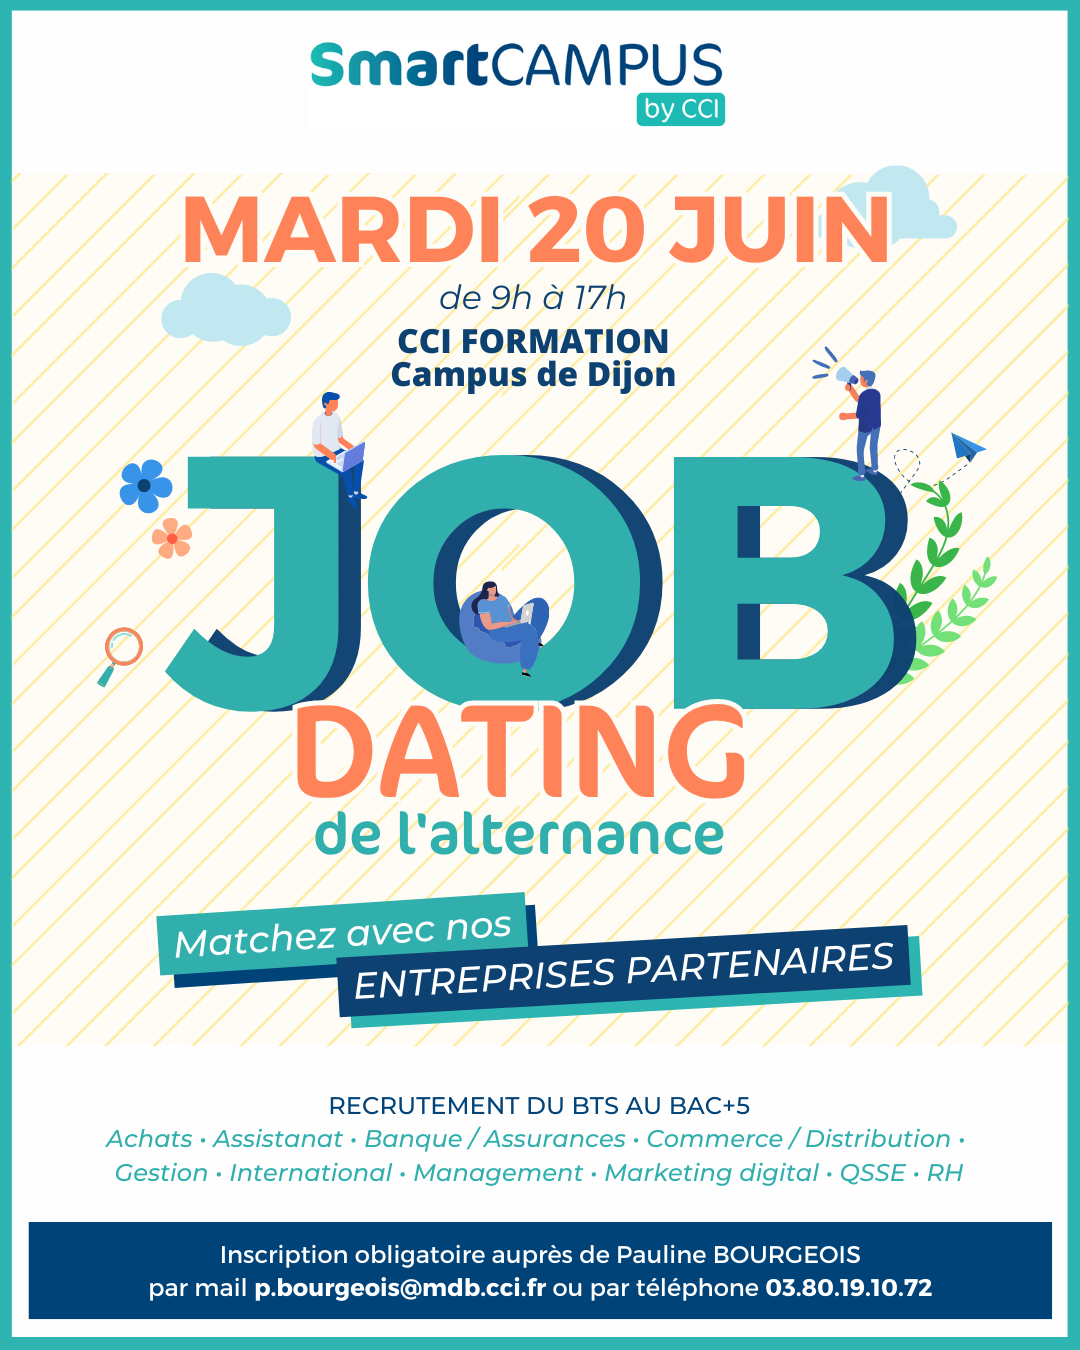 Job dating de l'alternance SmartCAMPUS by CCI